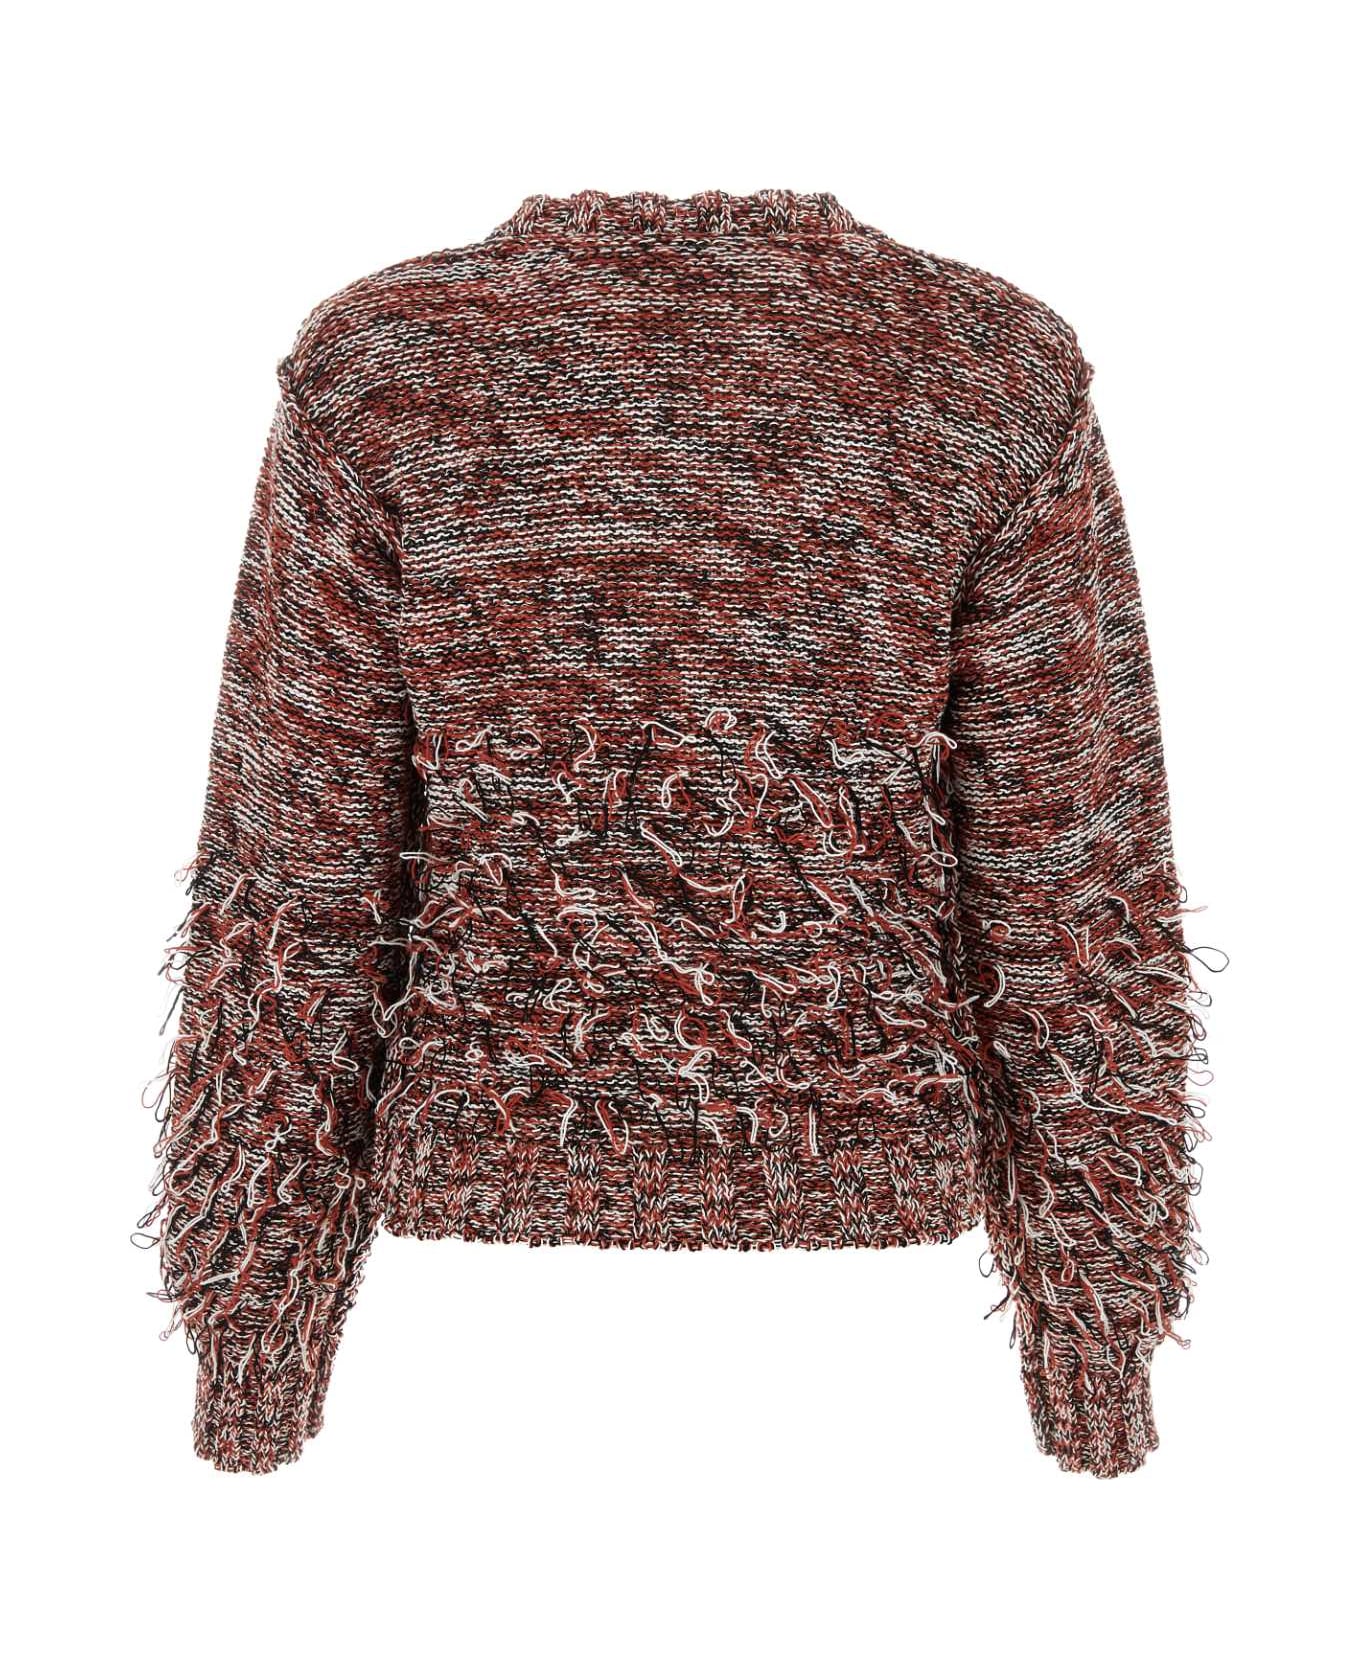 Durazzi Milano Embroidered Cotton Blend Sweater - BRICKRED